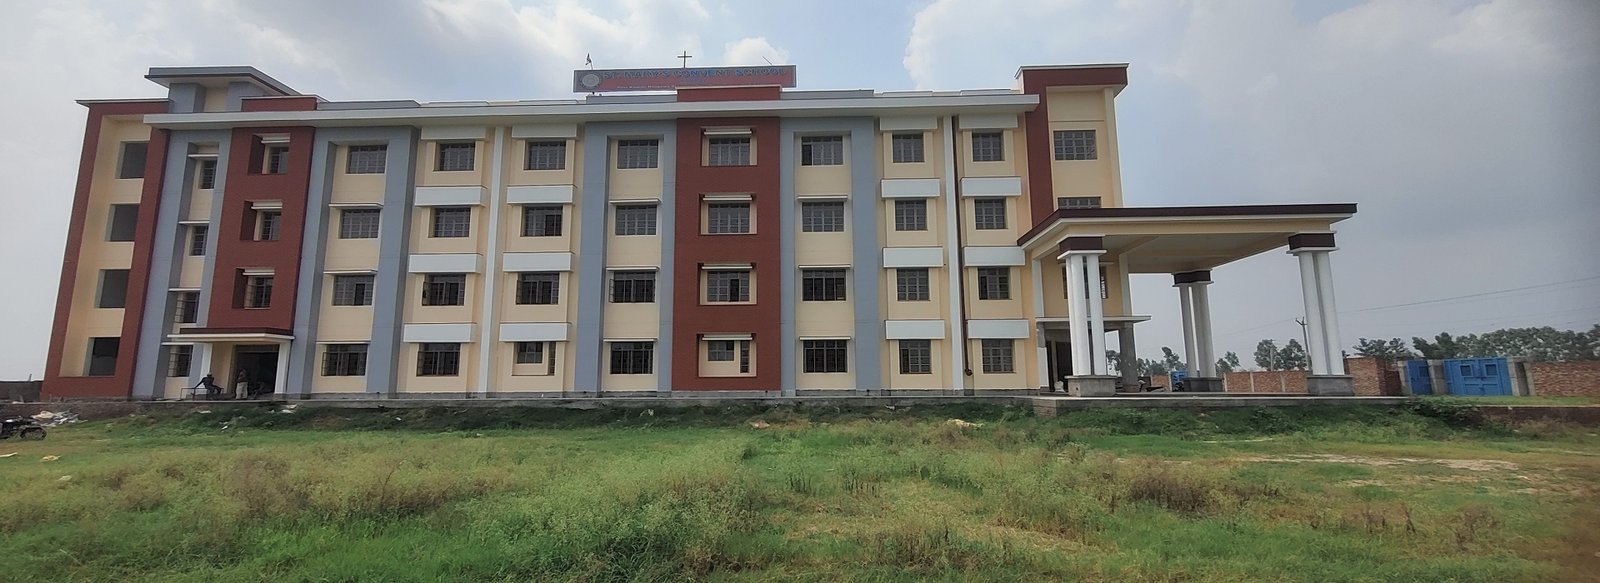 St. Gianelli Convent School, Nagpur